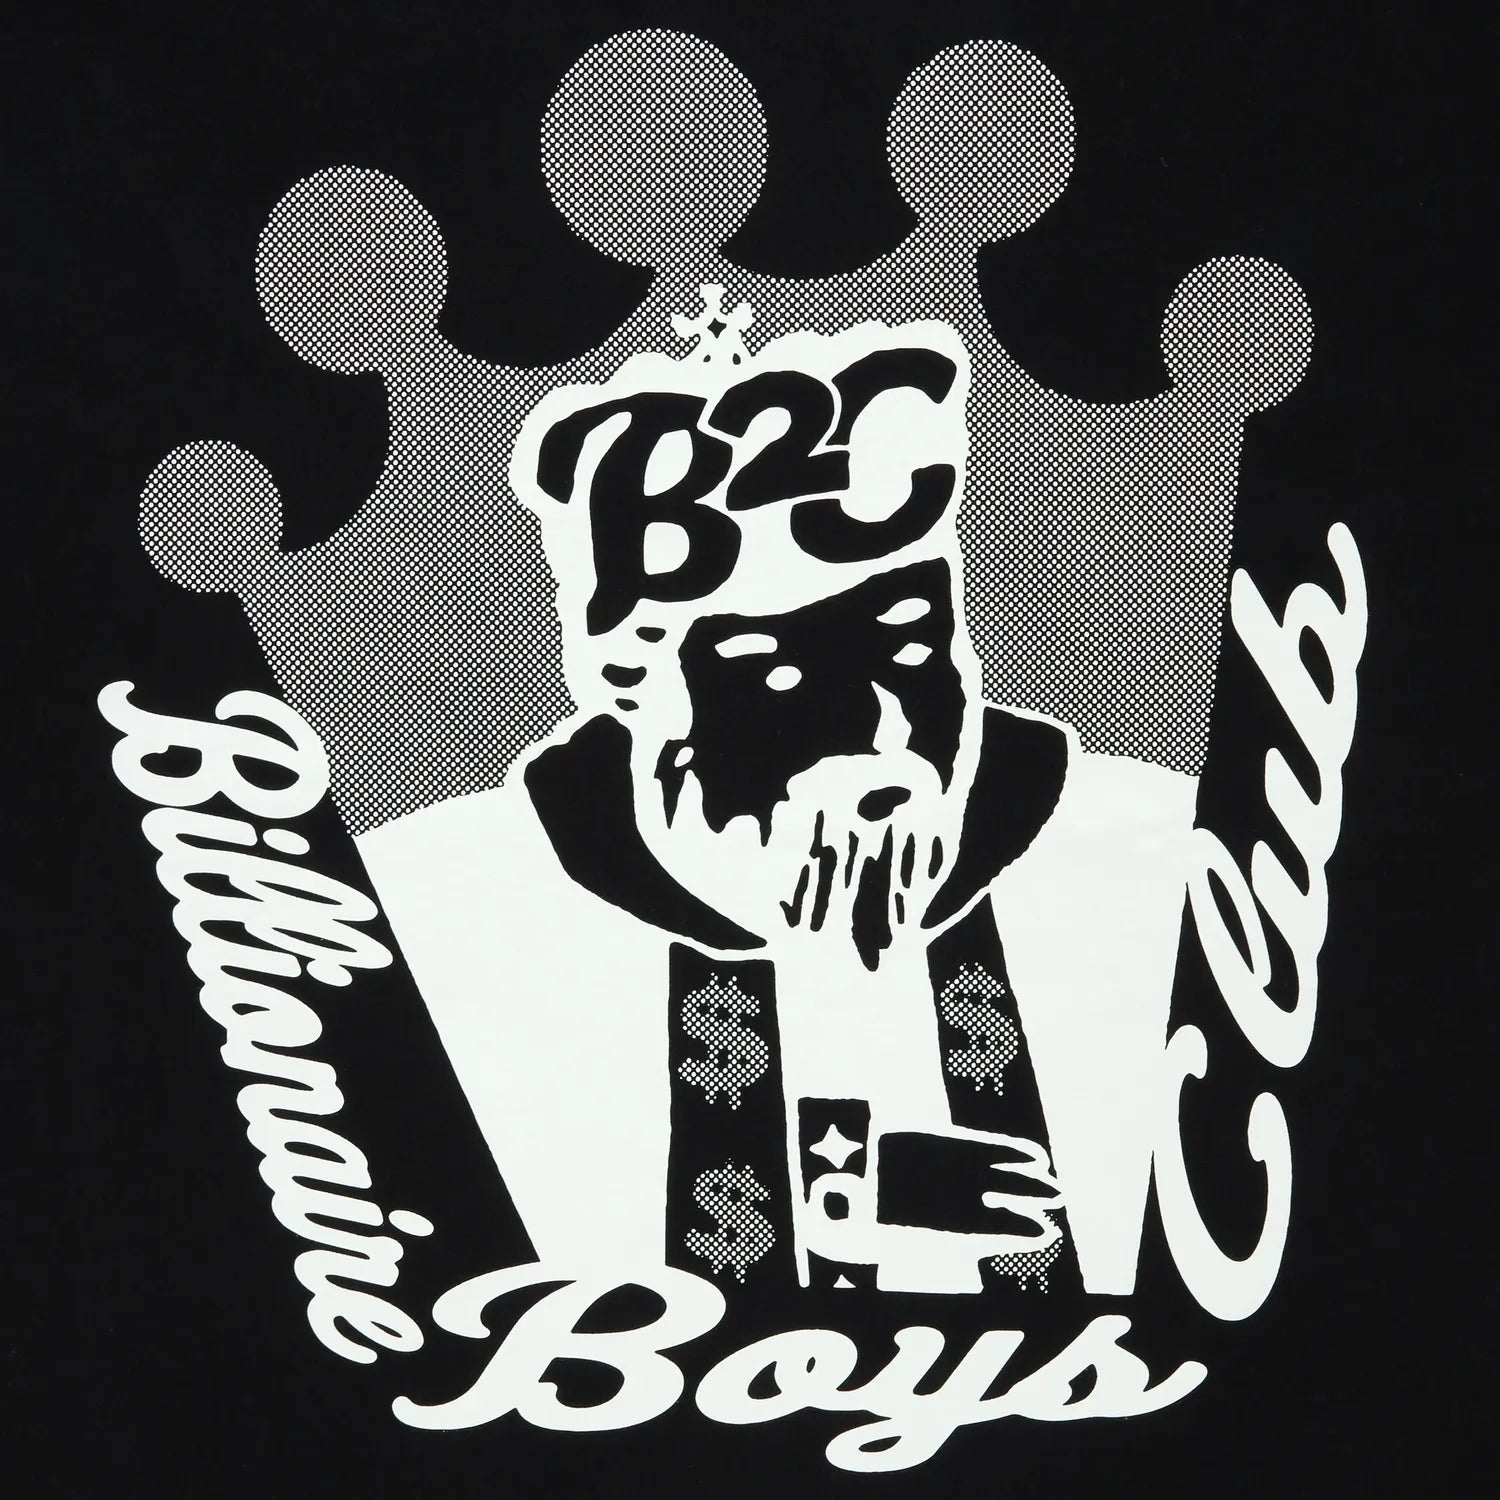 BILLIONAIRE BOYS CLUB / COTTON T-SHIRT B2C